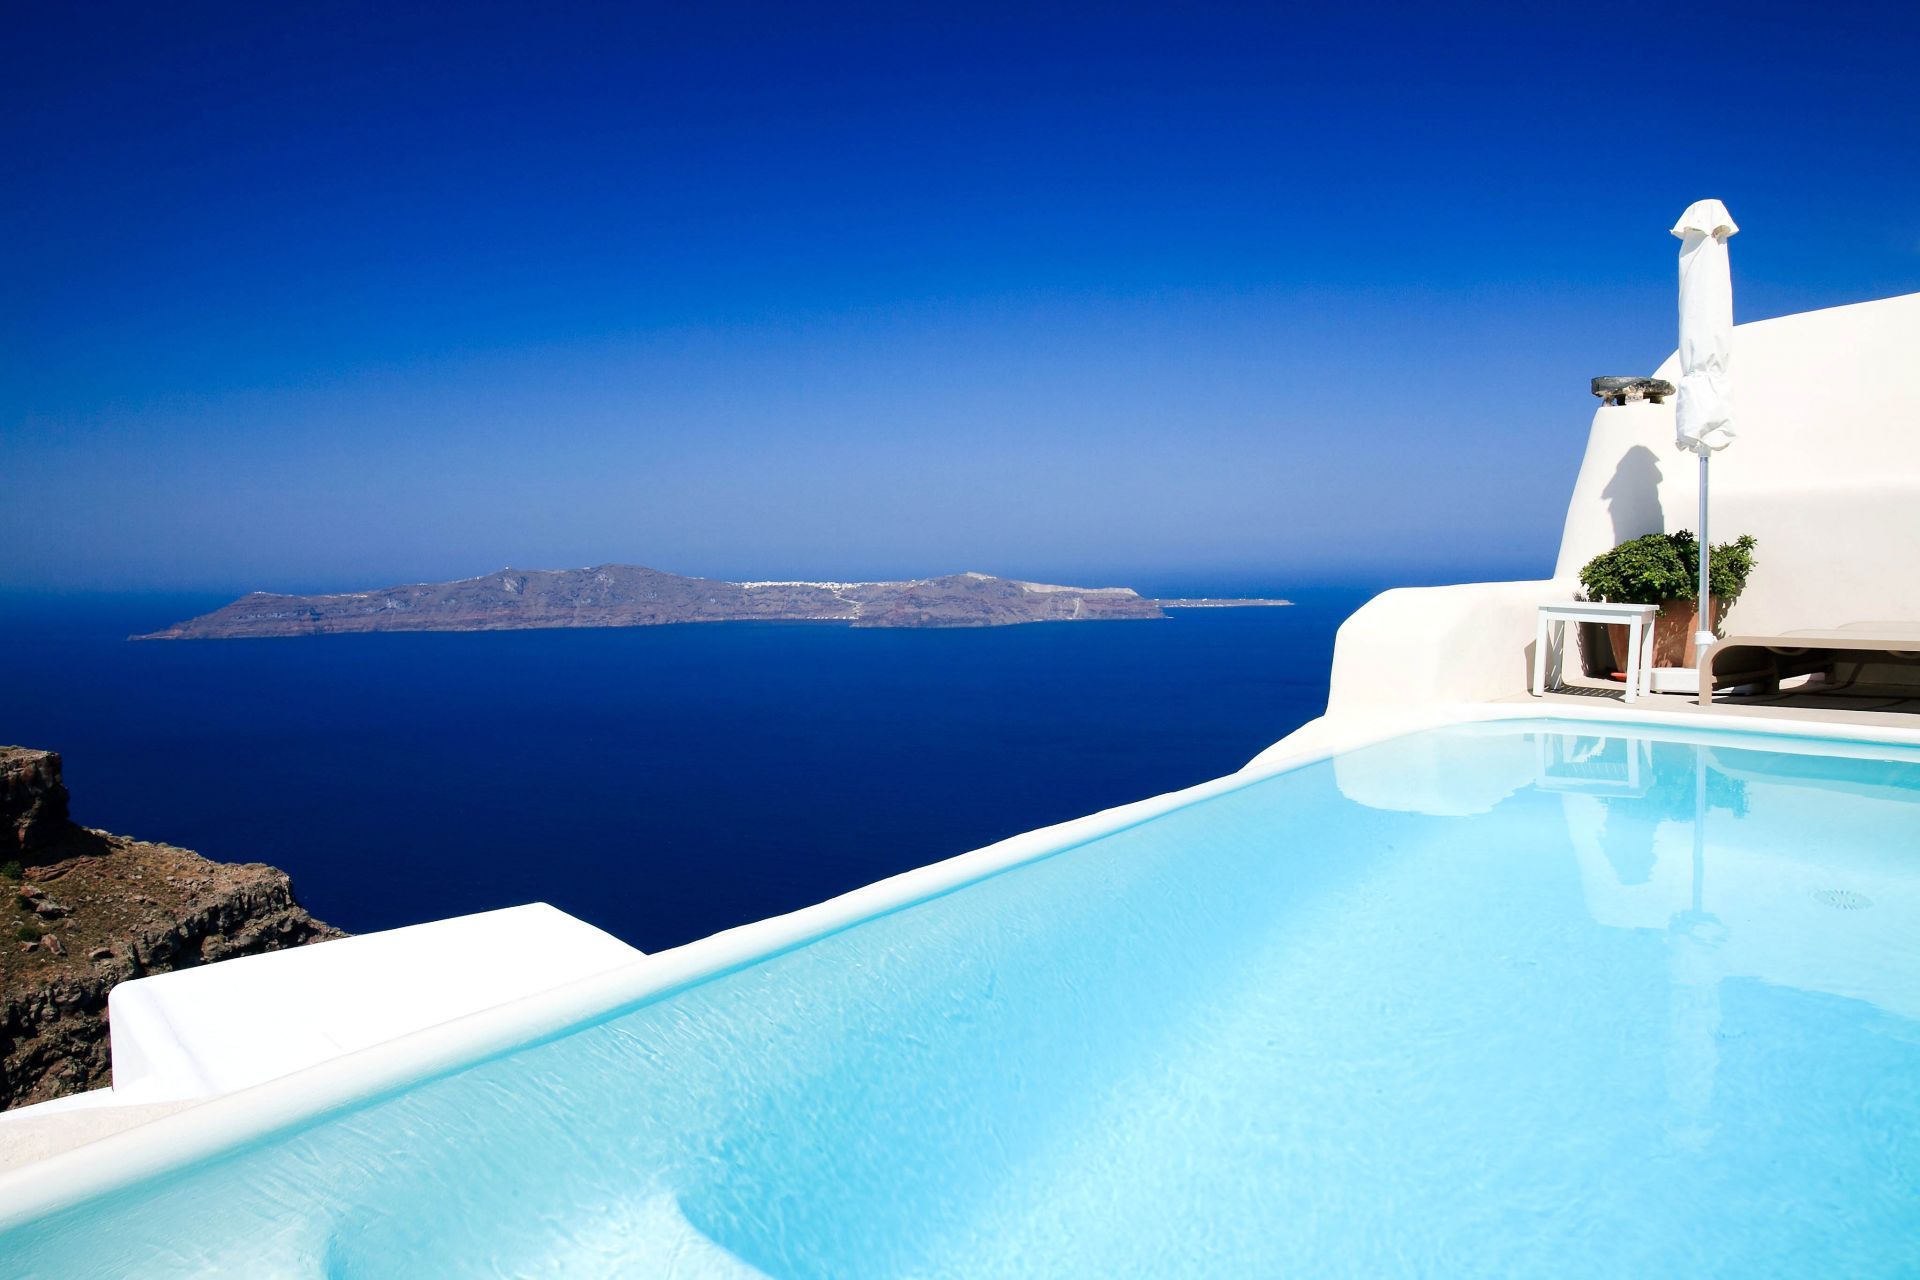 Luxury Hotel with infinity pool in Santorini, Greece